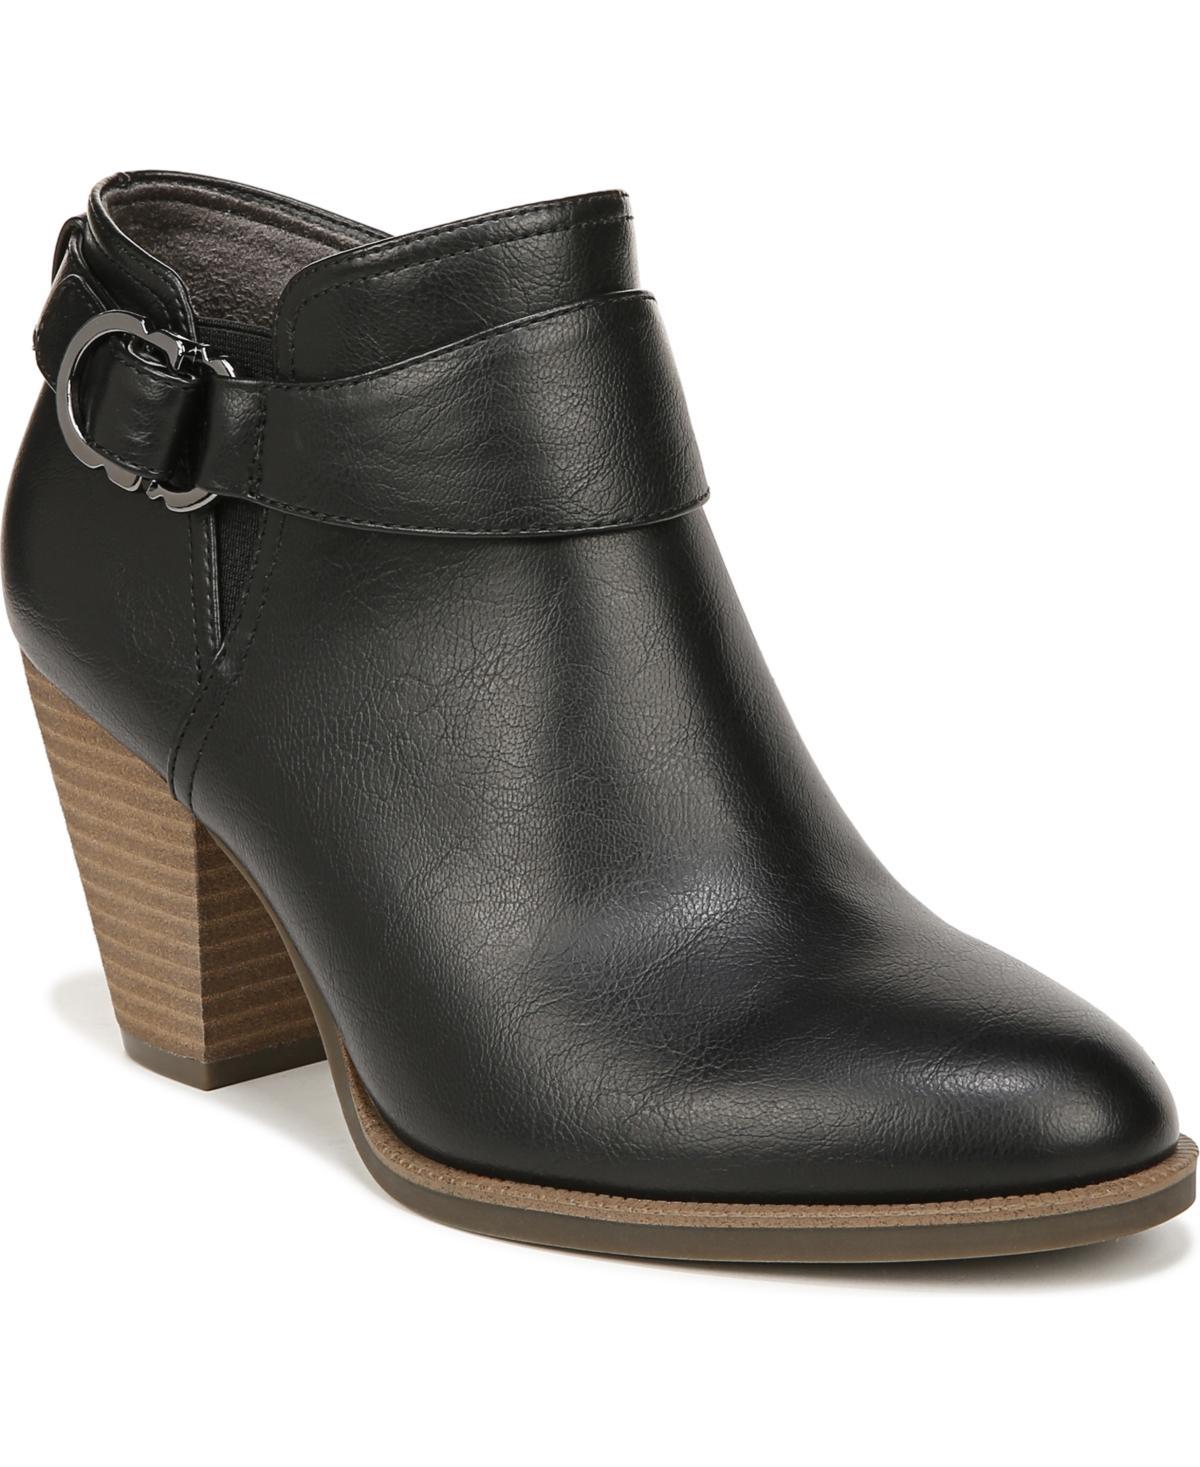 Dr. Scholls Kickstart Womens Ankle Boots Black Product Image